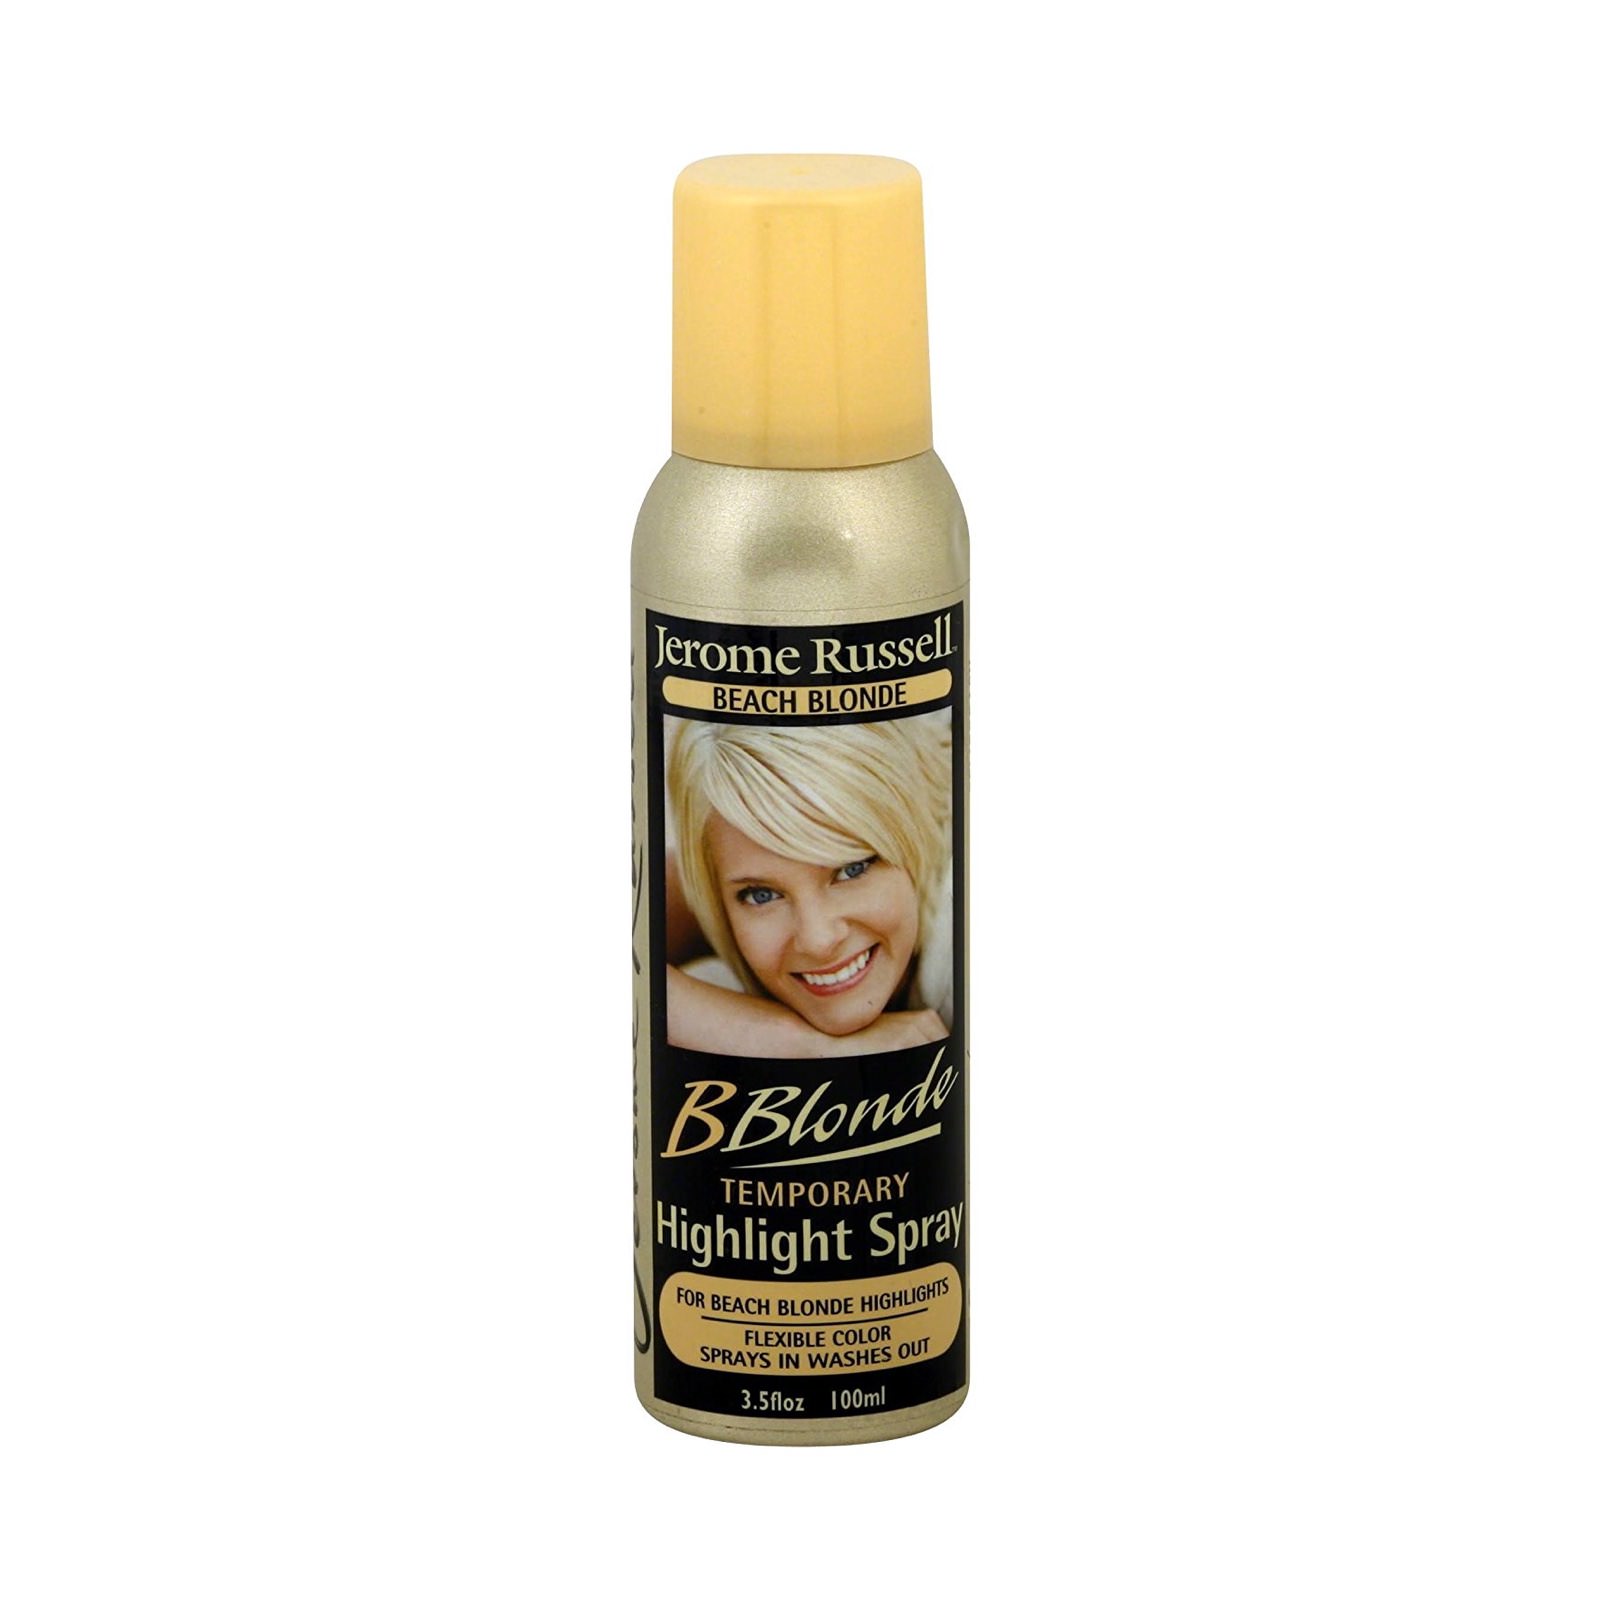 Share 84+ hair highlighter spray - in.eteachers